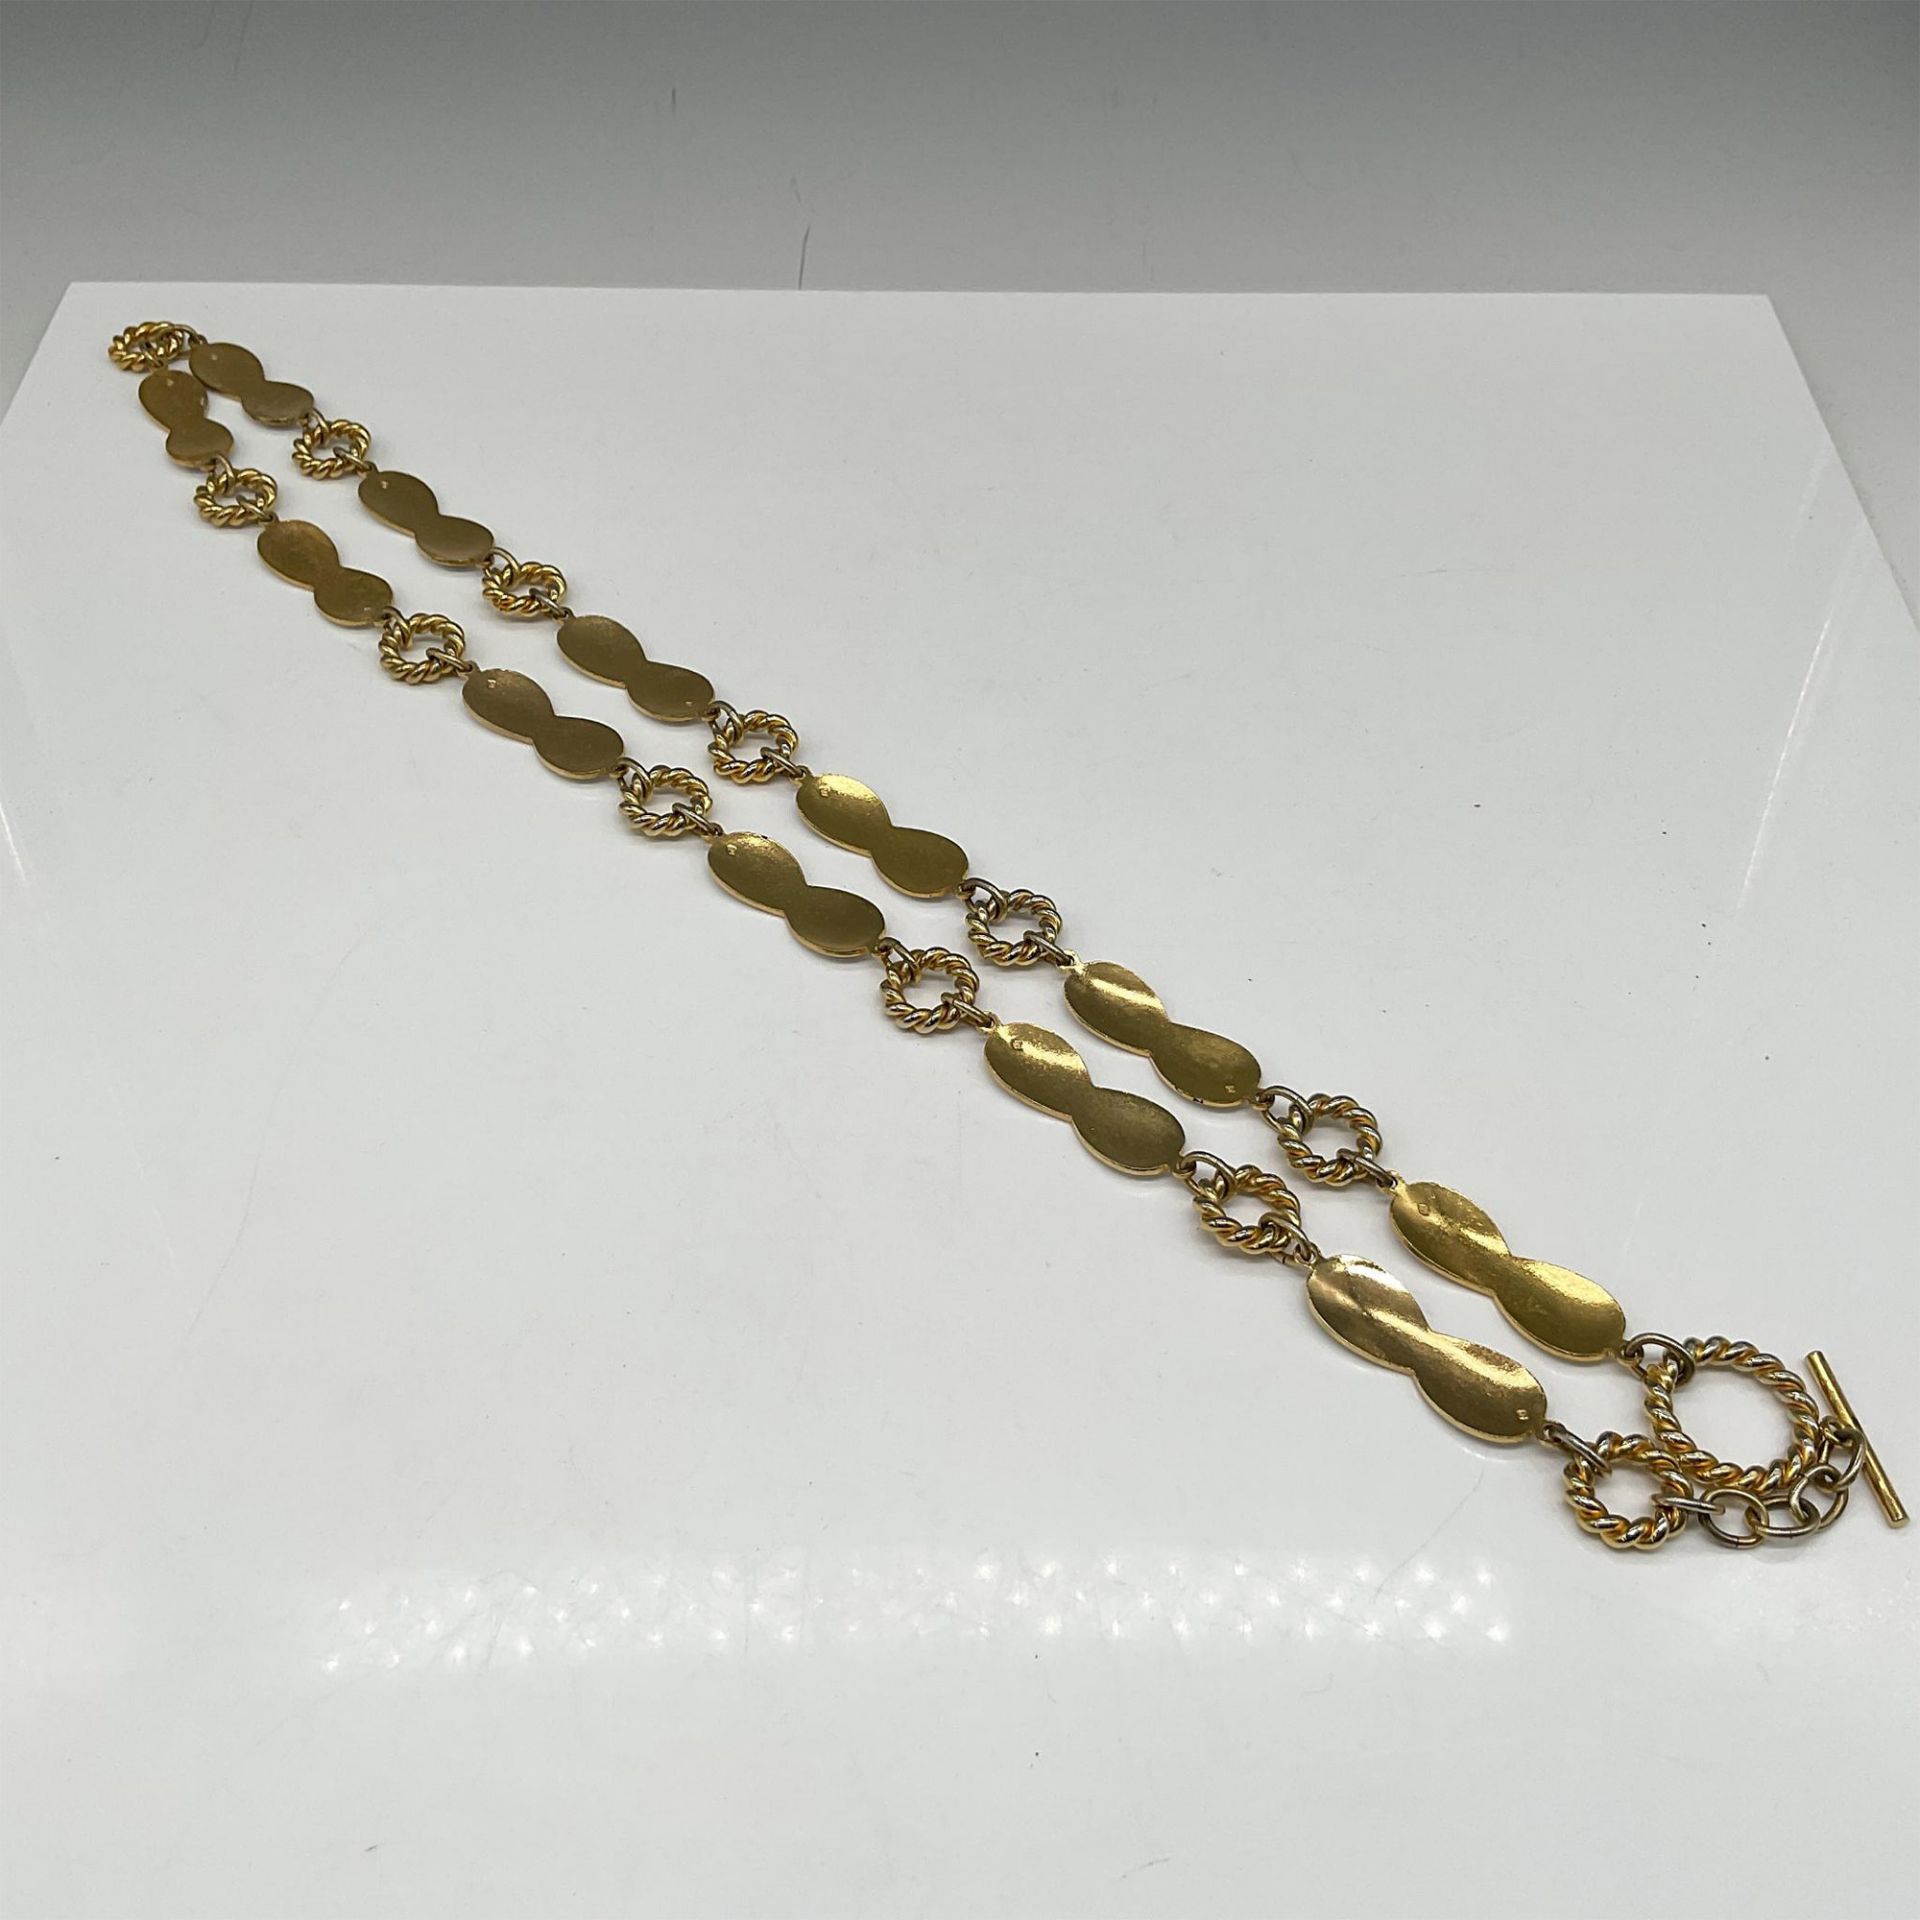 Vintage Gucci Gold Metal & Enameled Belt, Size Small - Image 3 of 3